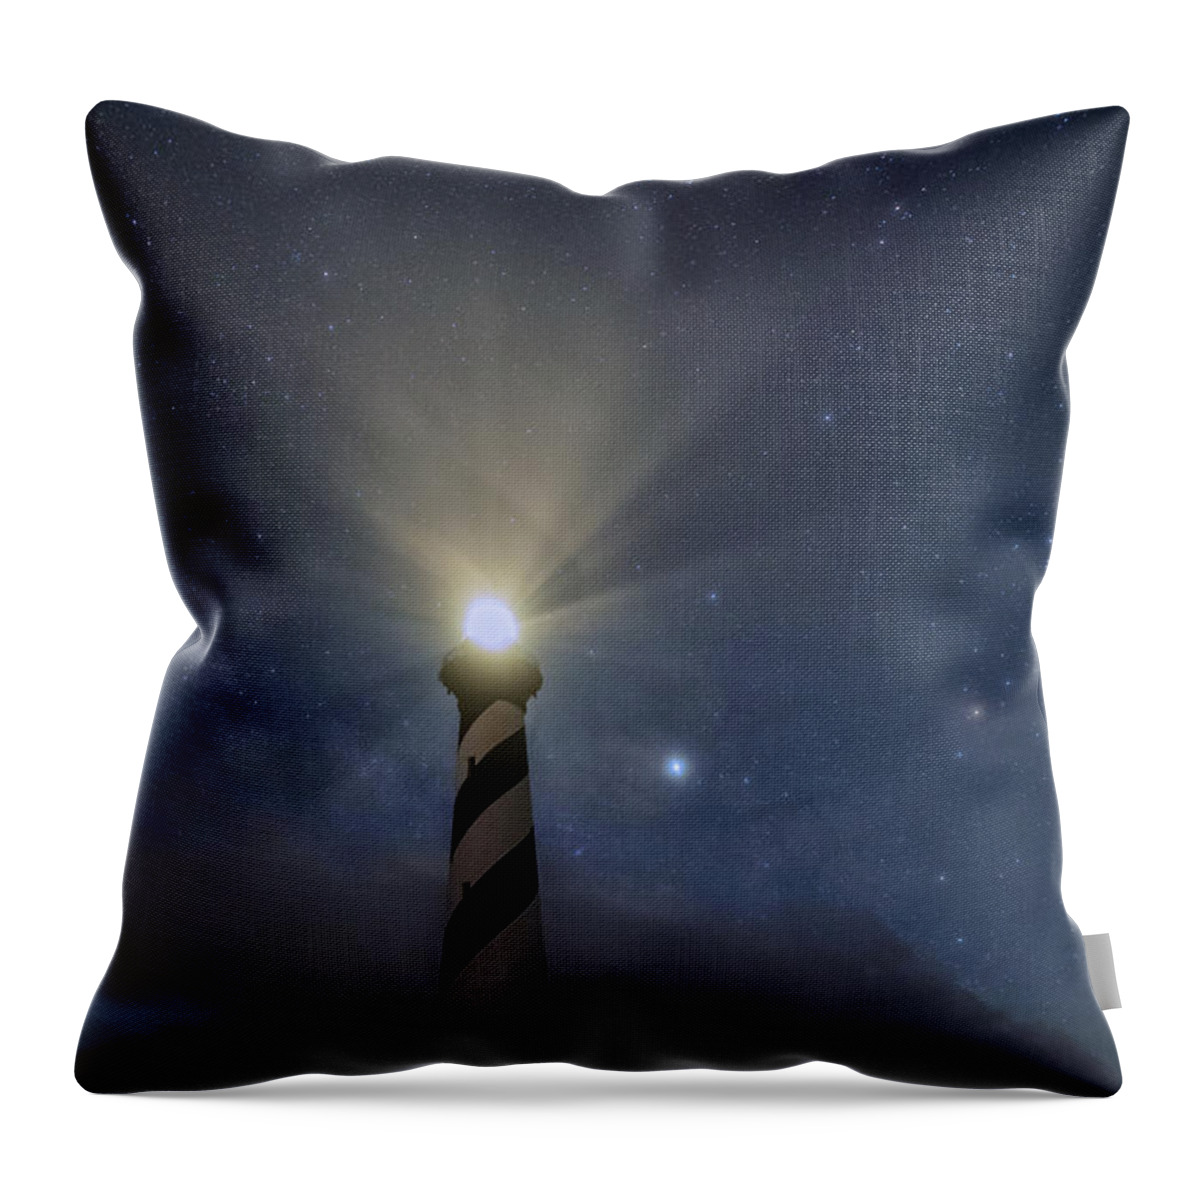 North Carolina Throw Pillow featuring the photograph Wind Over Hatteras Light by Robert Fawcett